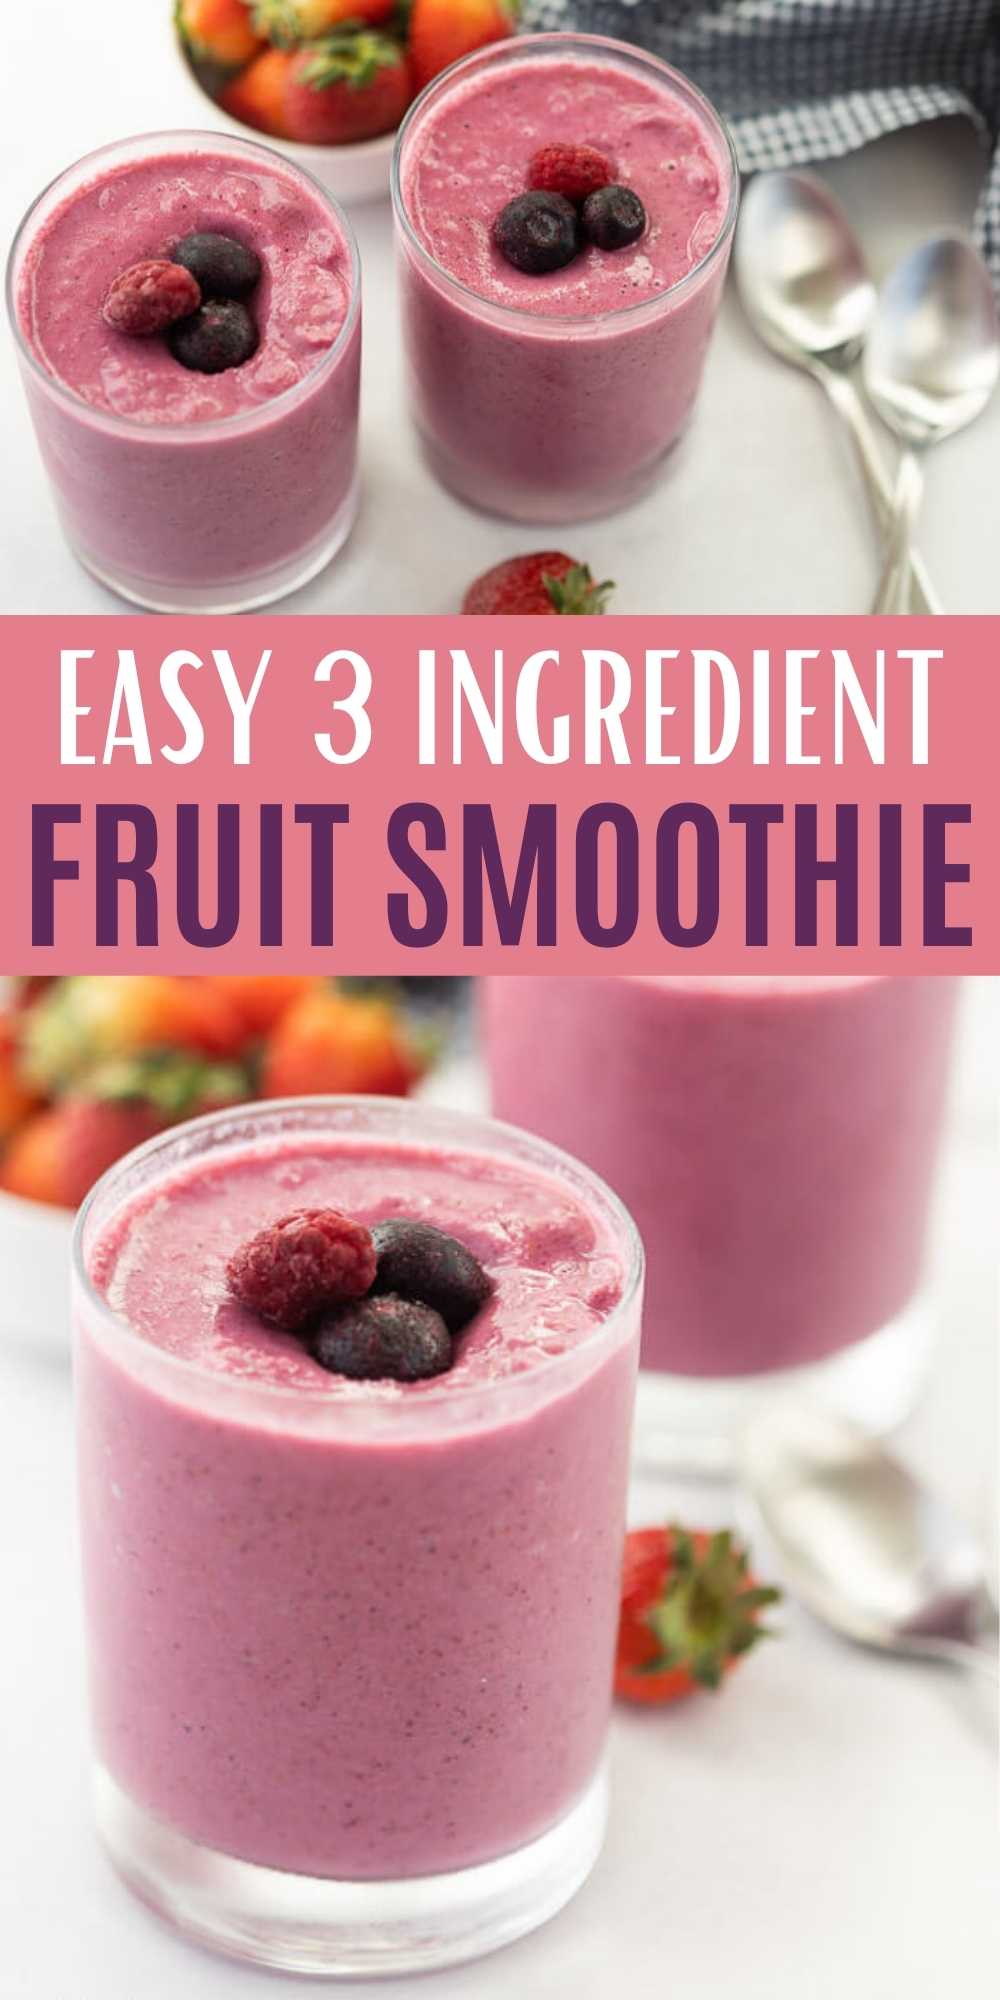 Easy fruit smoothie recipe- How to make a fruit smoothie